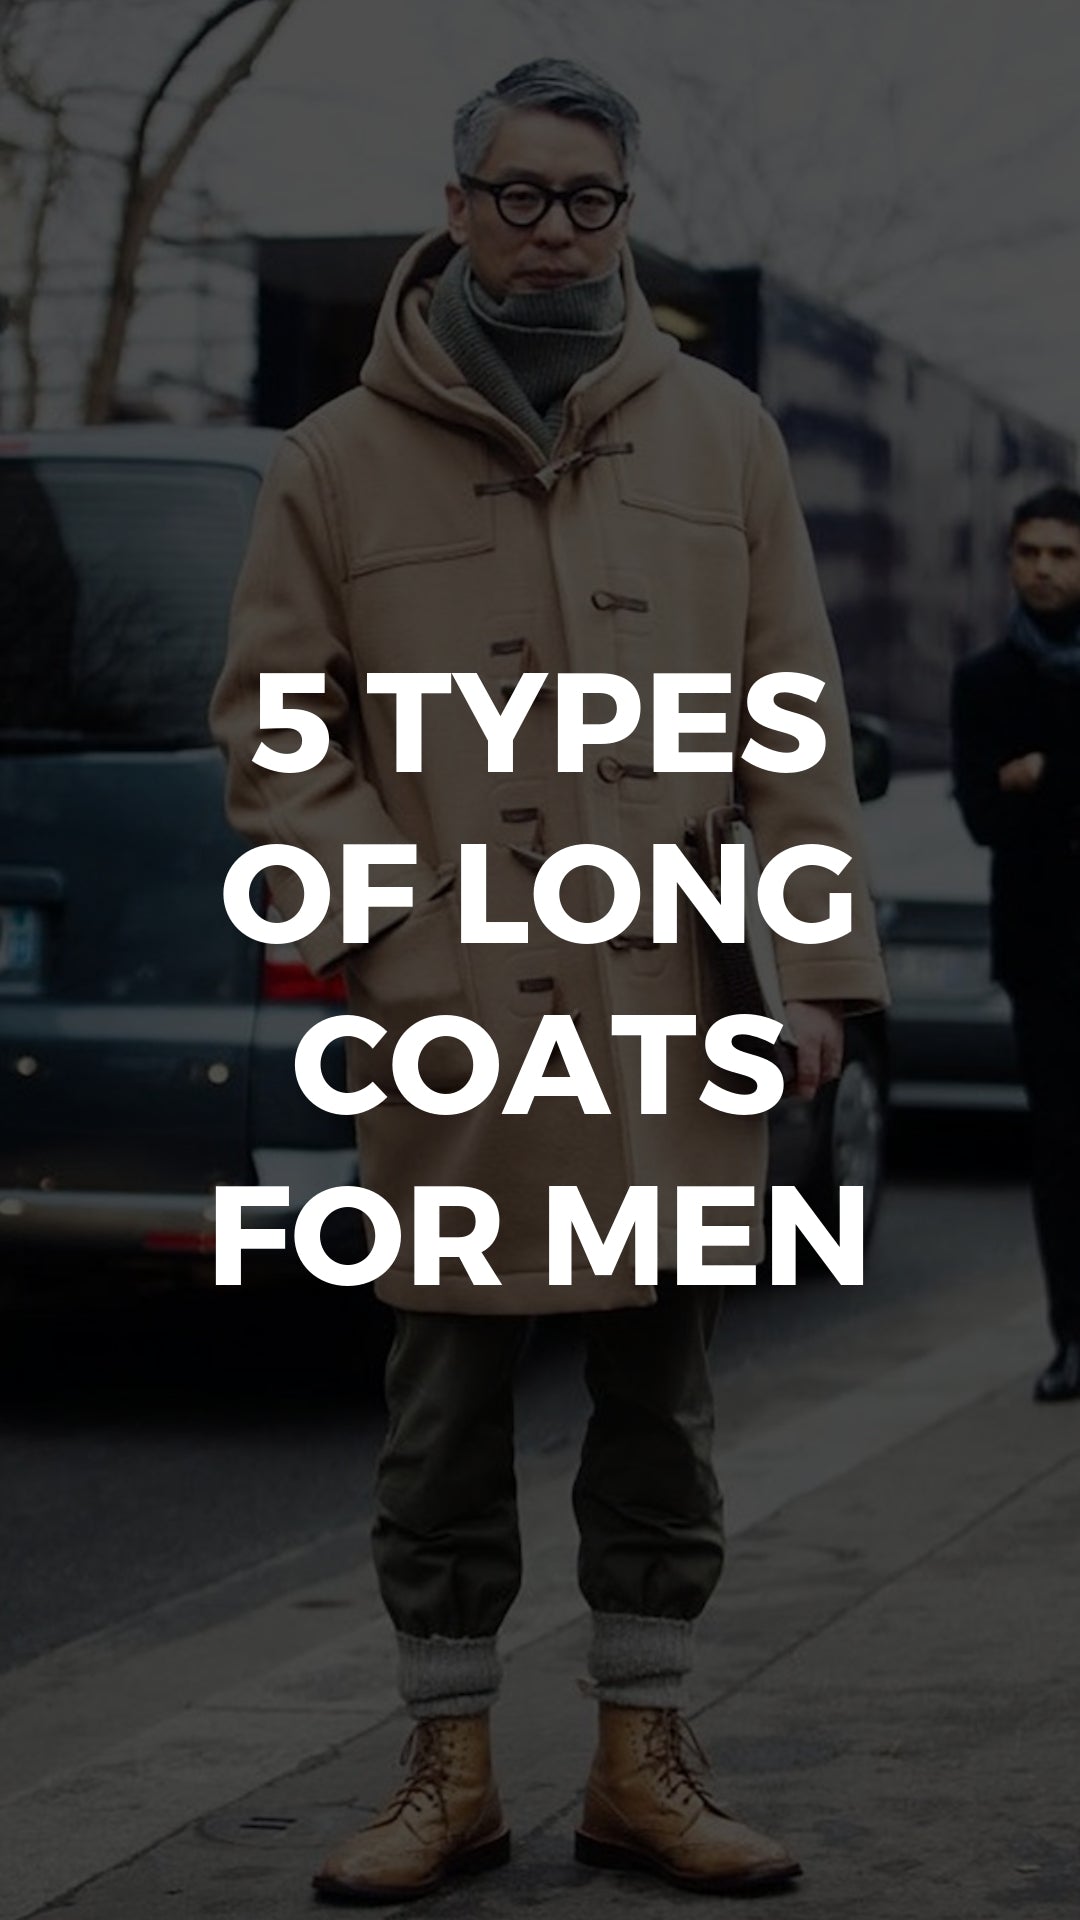 5 Coats Every Modern Man Must Have in His Wardrobe #longcoats #mensfashion #streetstyle